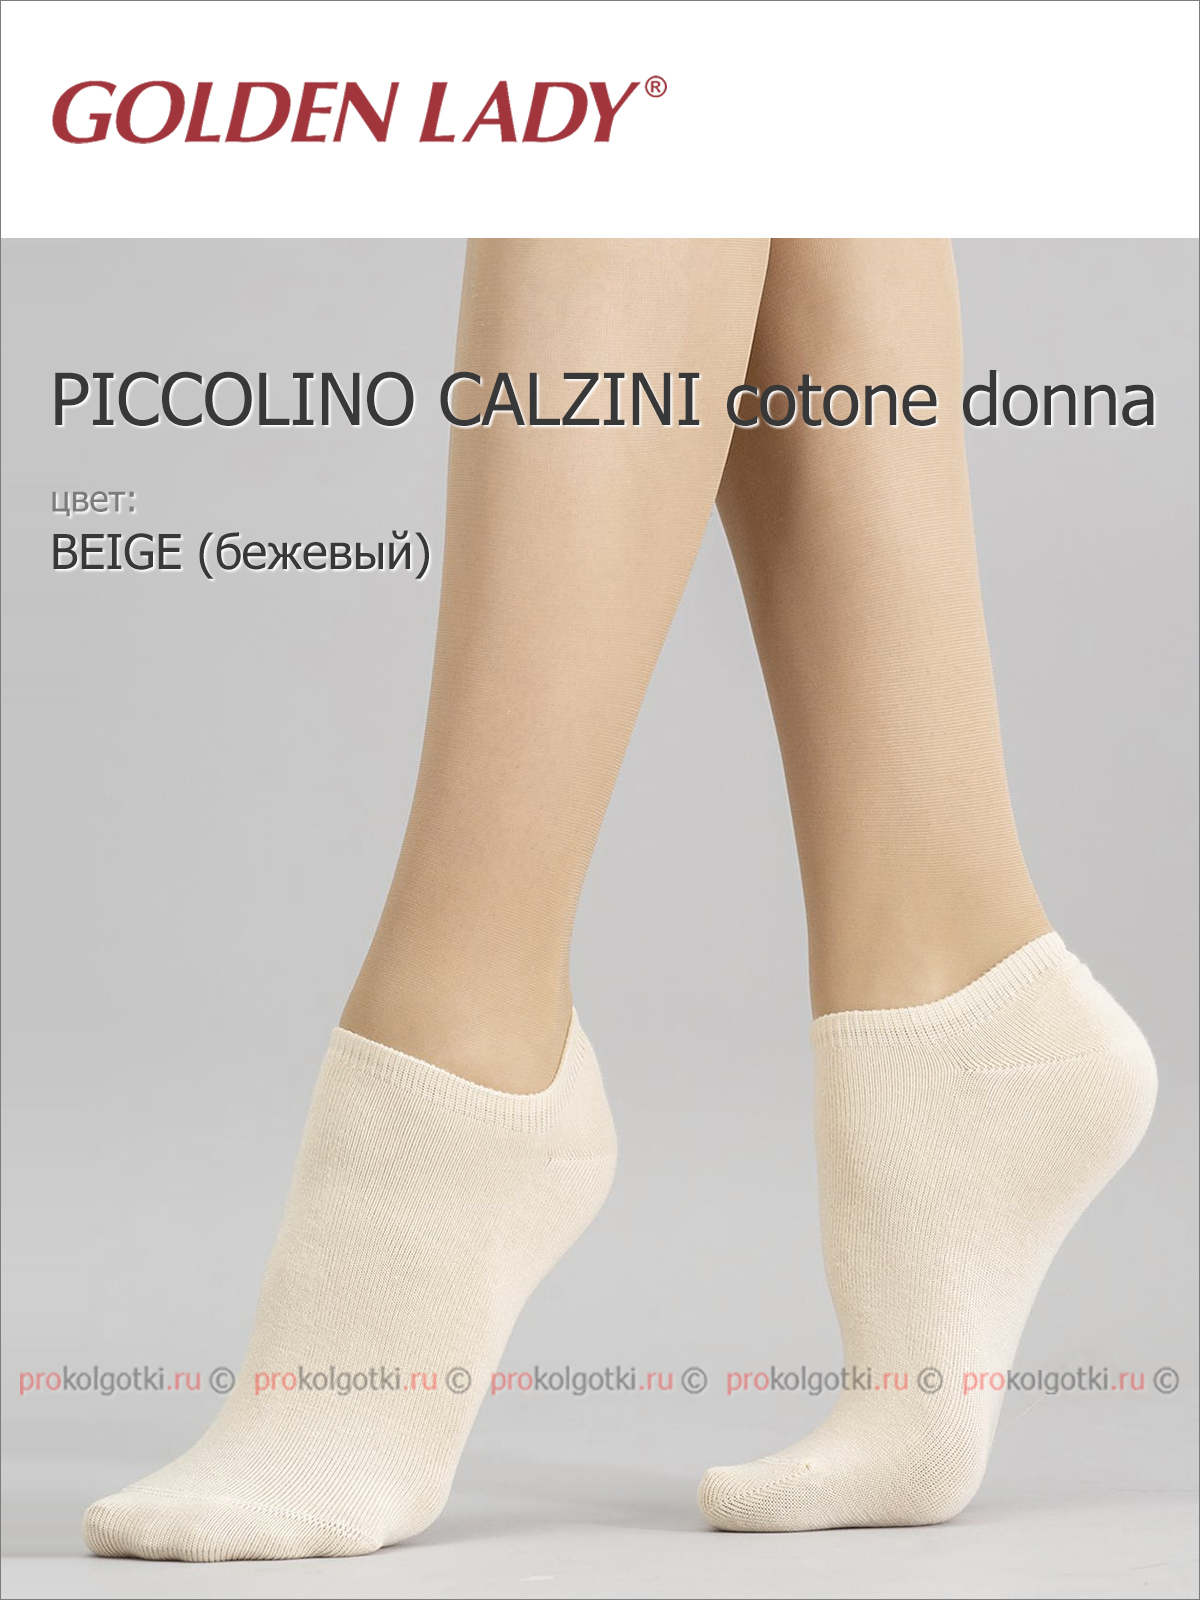 Носки Golden Lady Piccolino Calzini Cotone Donna - фото 3